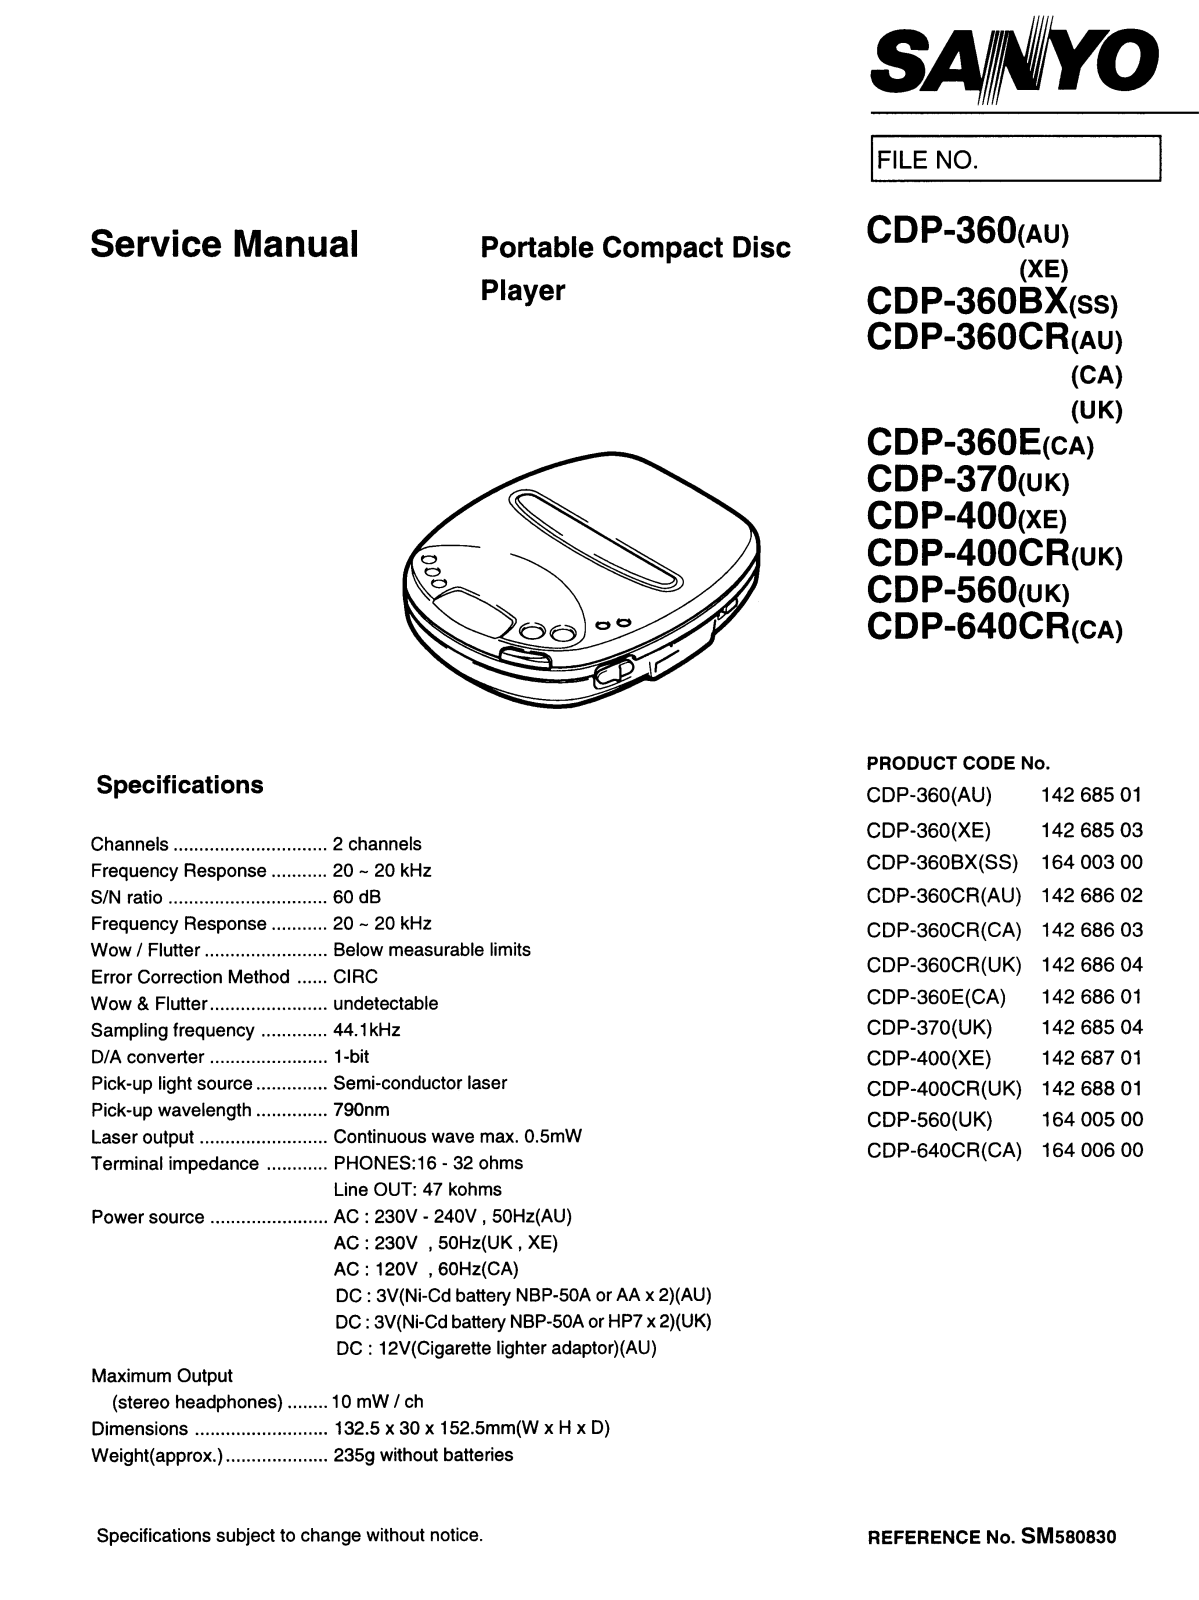 Sanyo CDP-360, CDP-370, CDP-400, CDP-560, CDP-640 Service manual